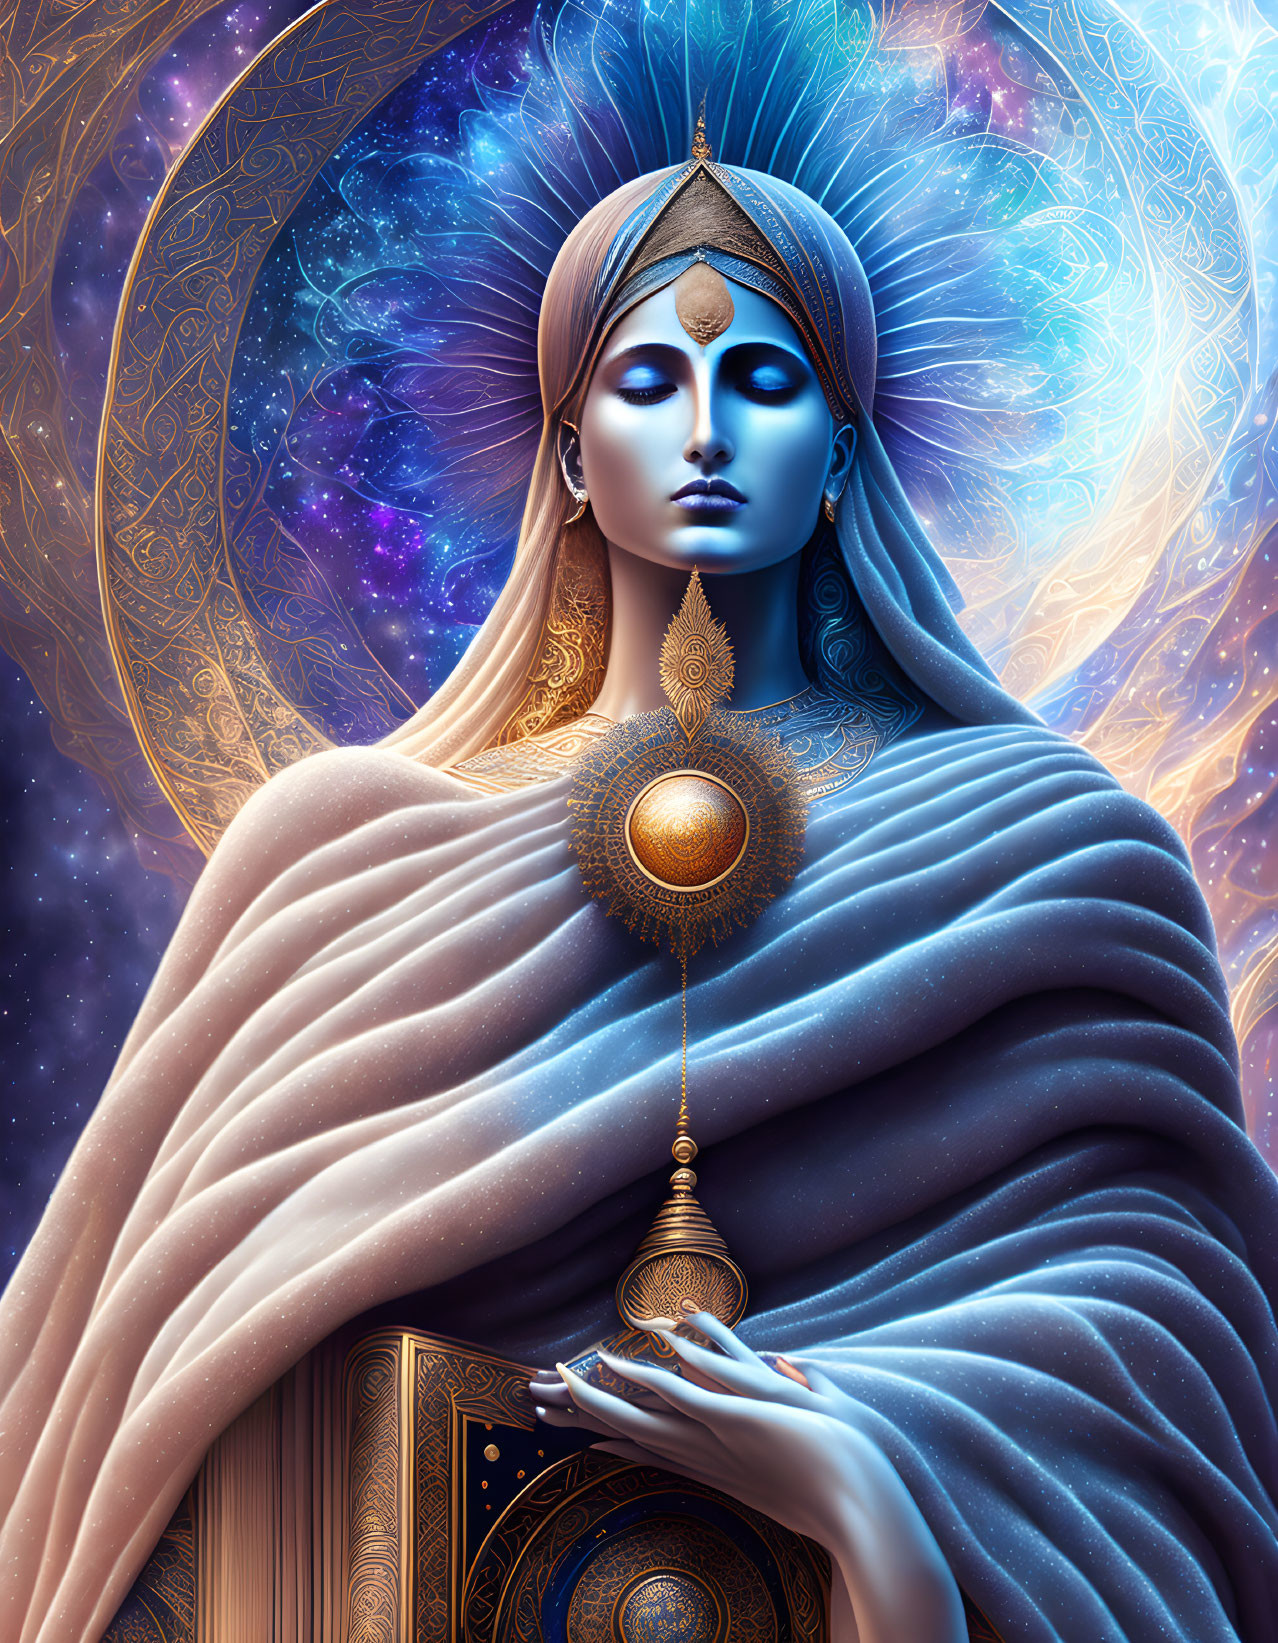 Blue-skinned figure with cosmic motifs holding mystical object in digital artwork